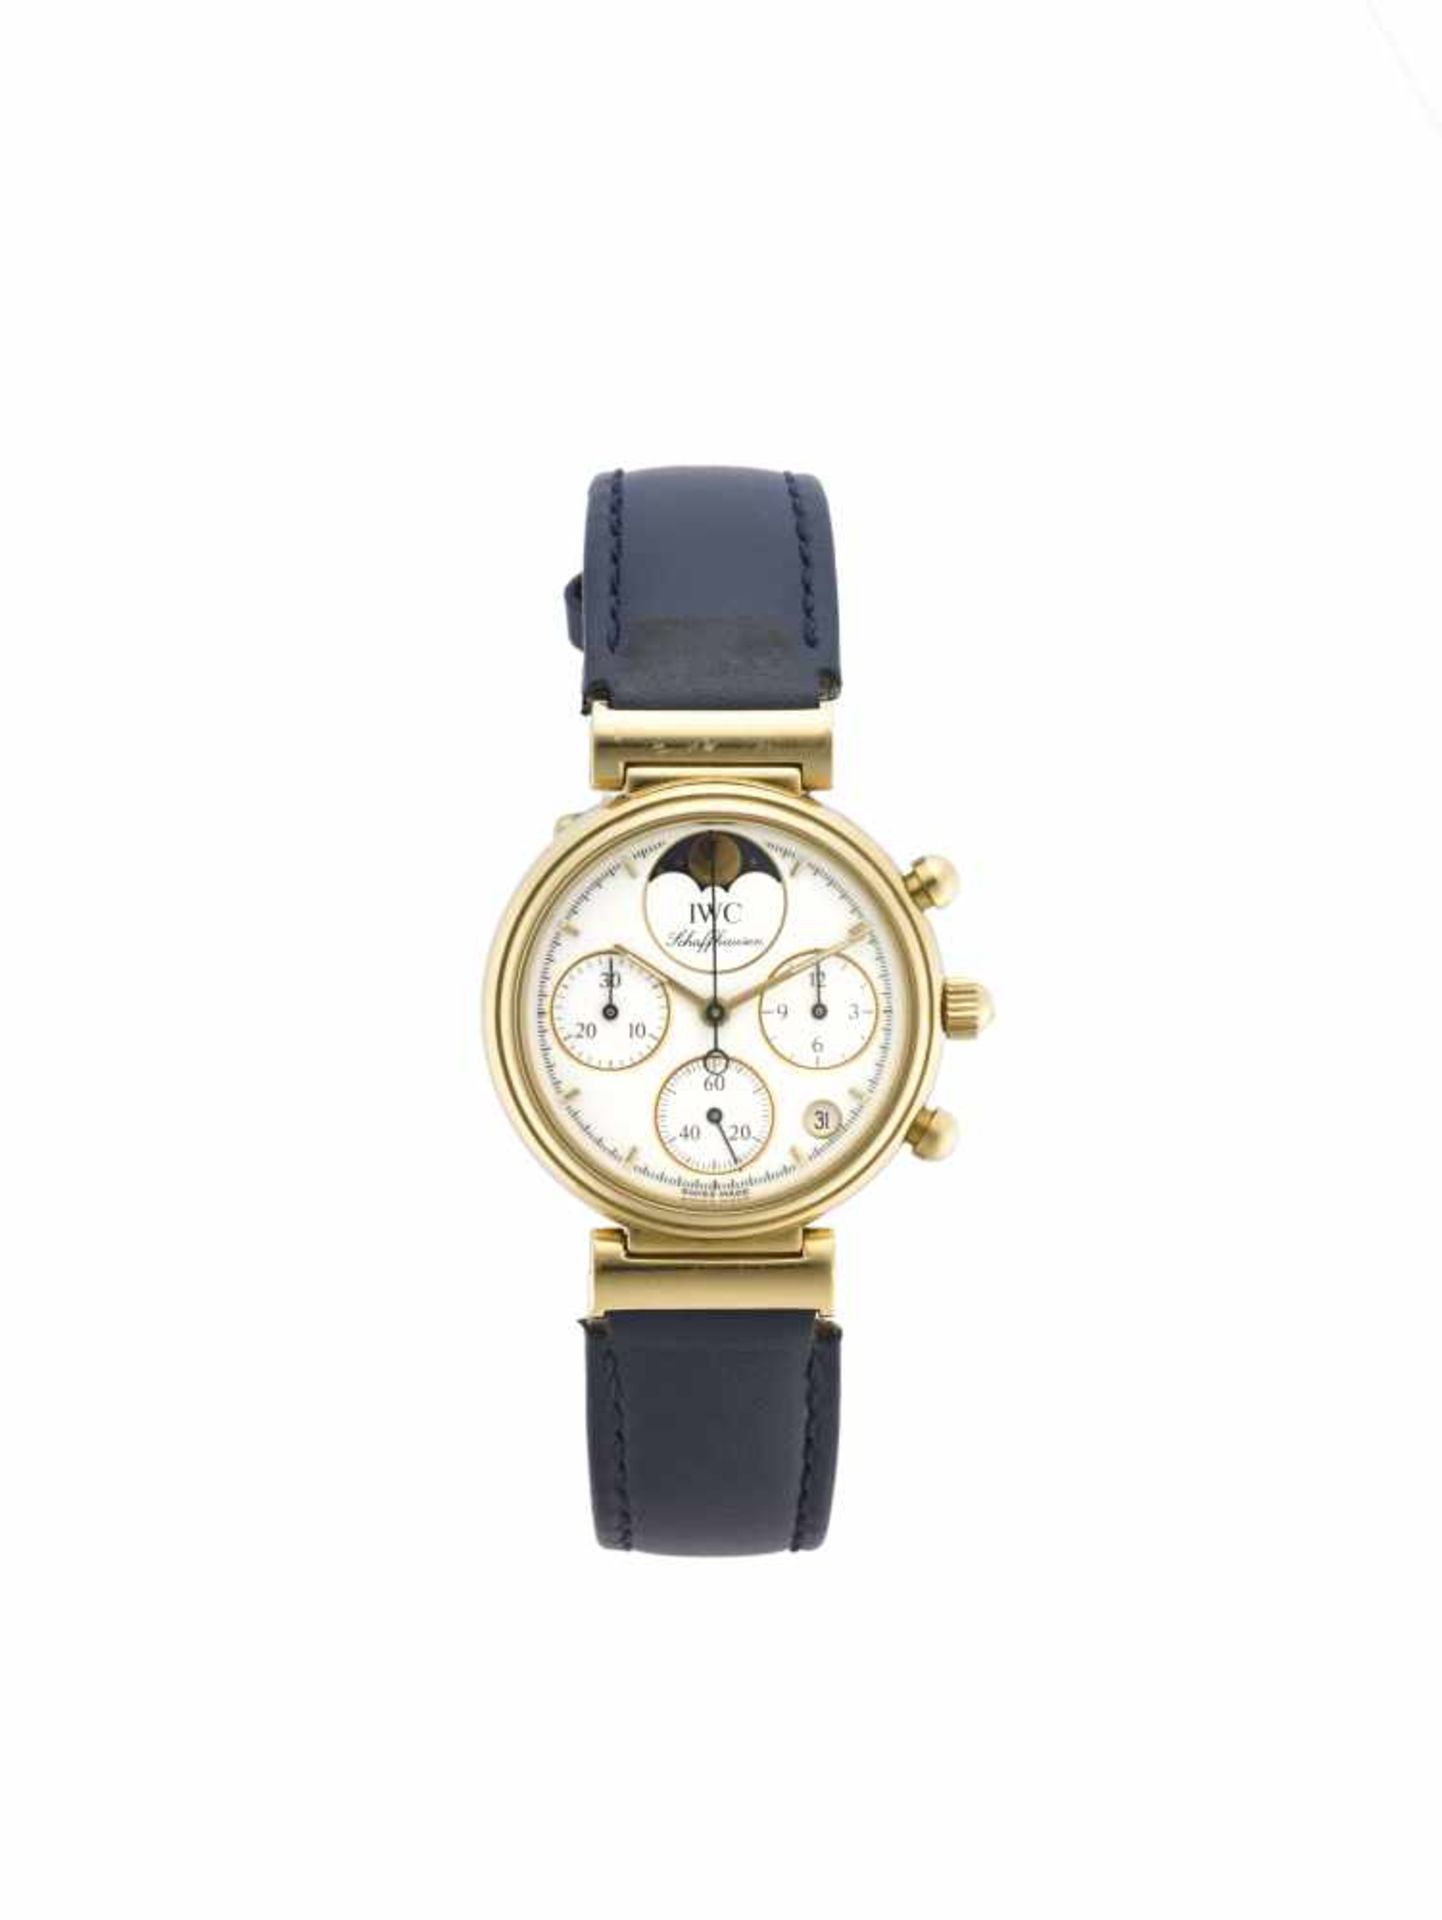 IWC DA VINCILady's 18K gold wristwatch1990sDial signedQuartz movementWhite dial with indexes